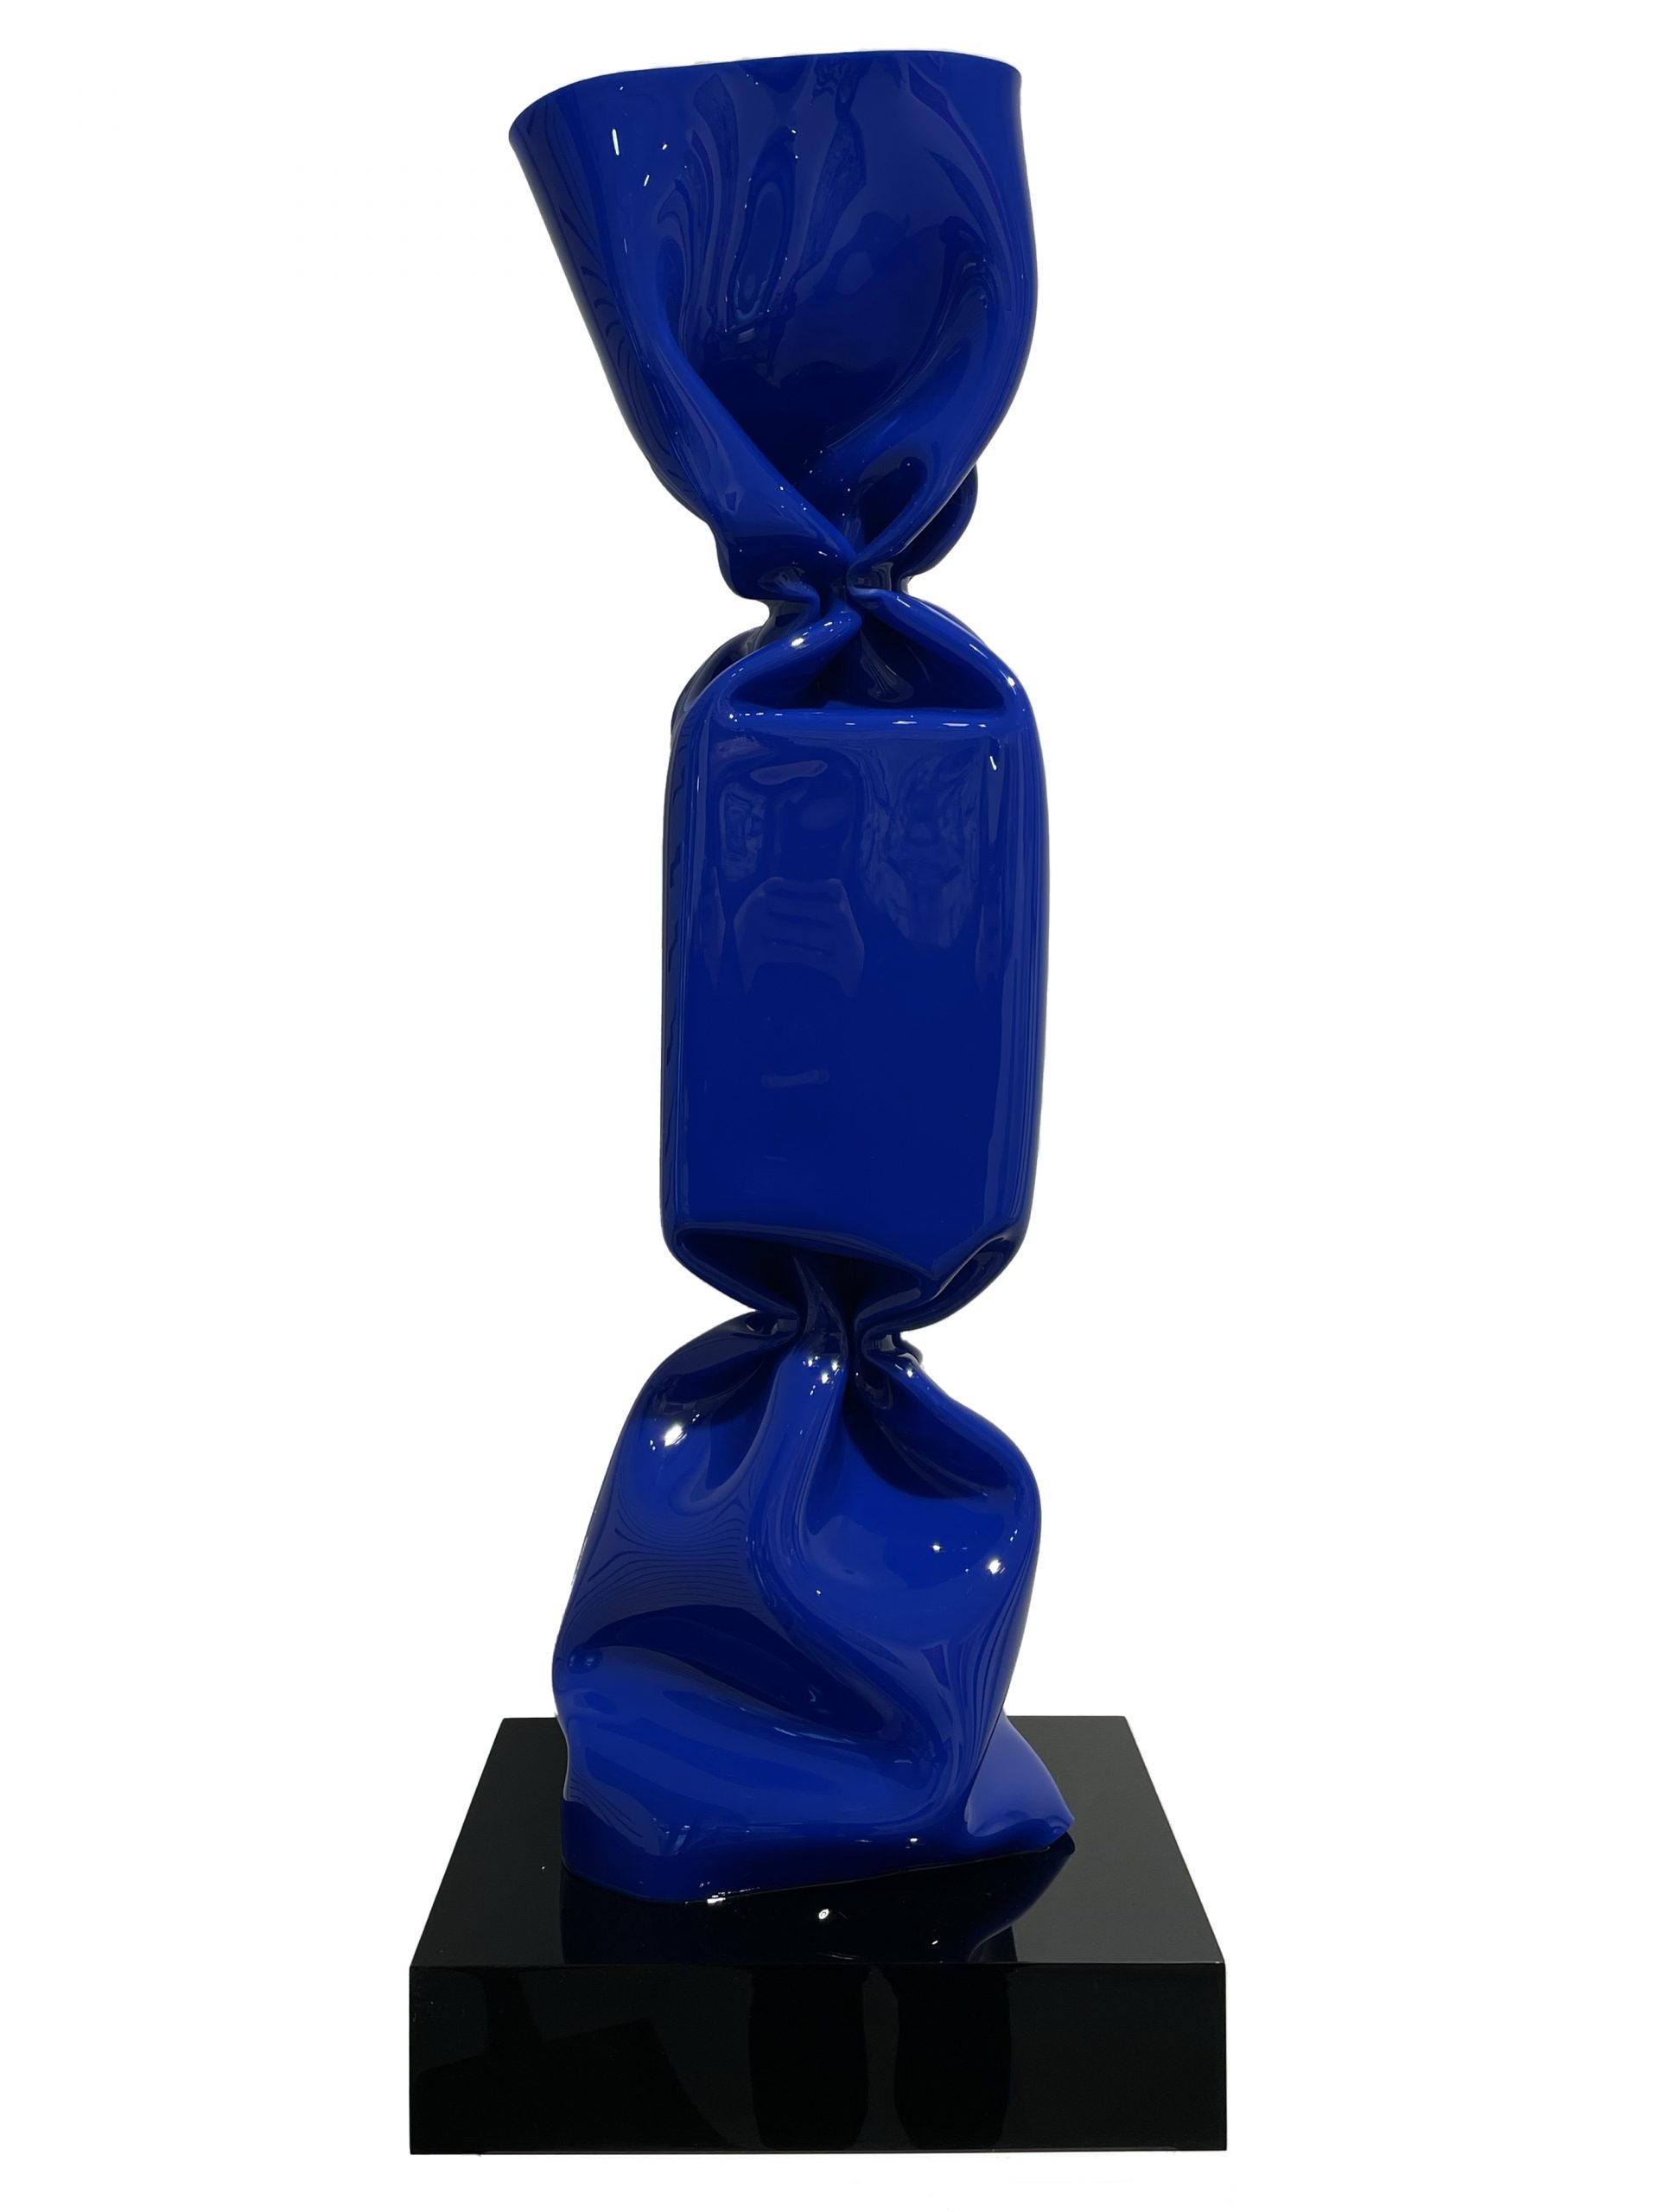 Laurence Jenk - Wrapping Bonbon Bleu klein 2021, Plexiglass 84 cm | 33 1/10 in Unique © Marciano Contemporary